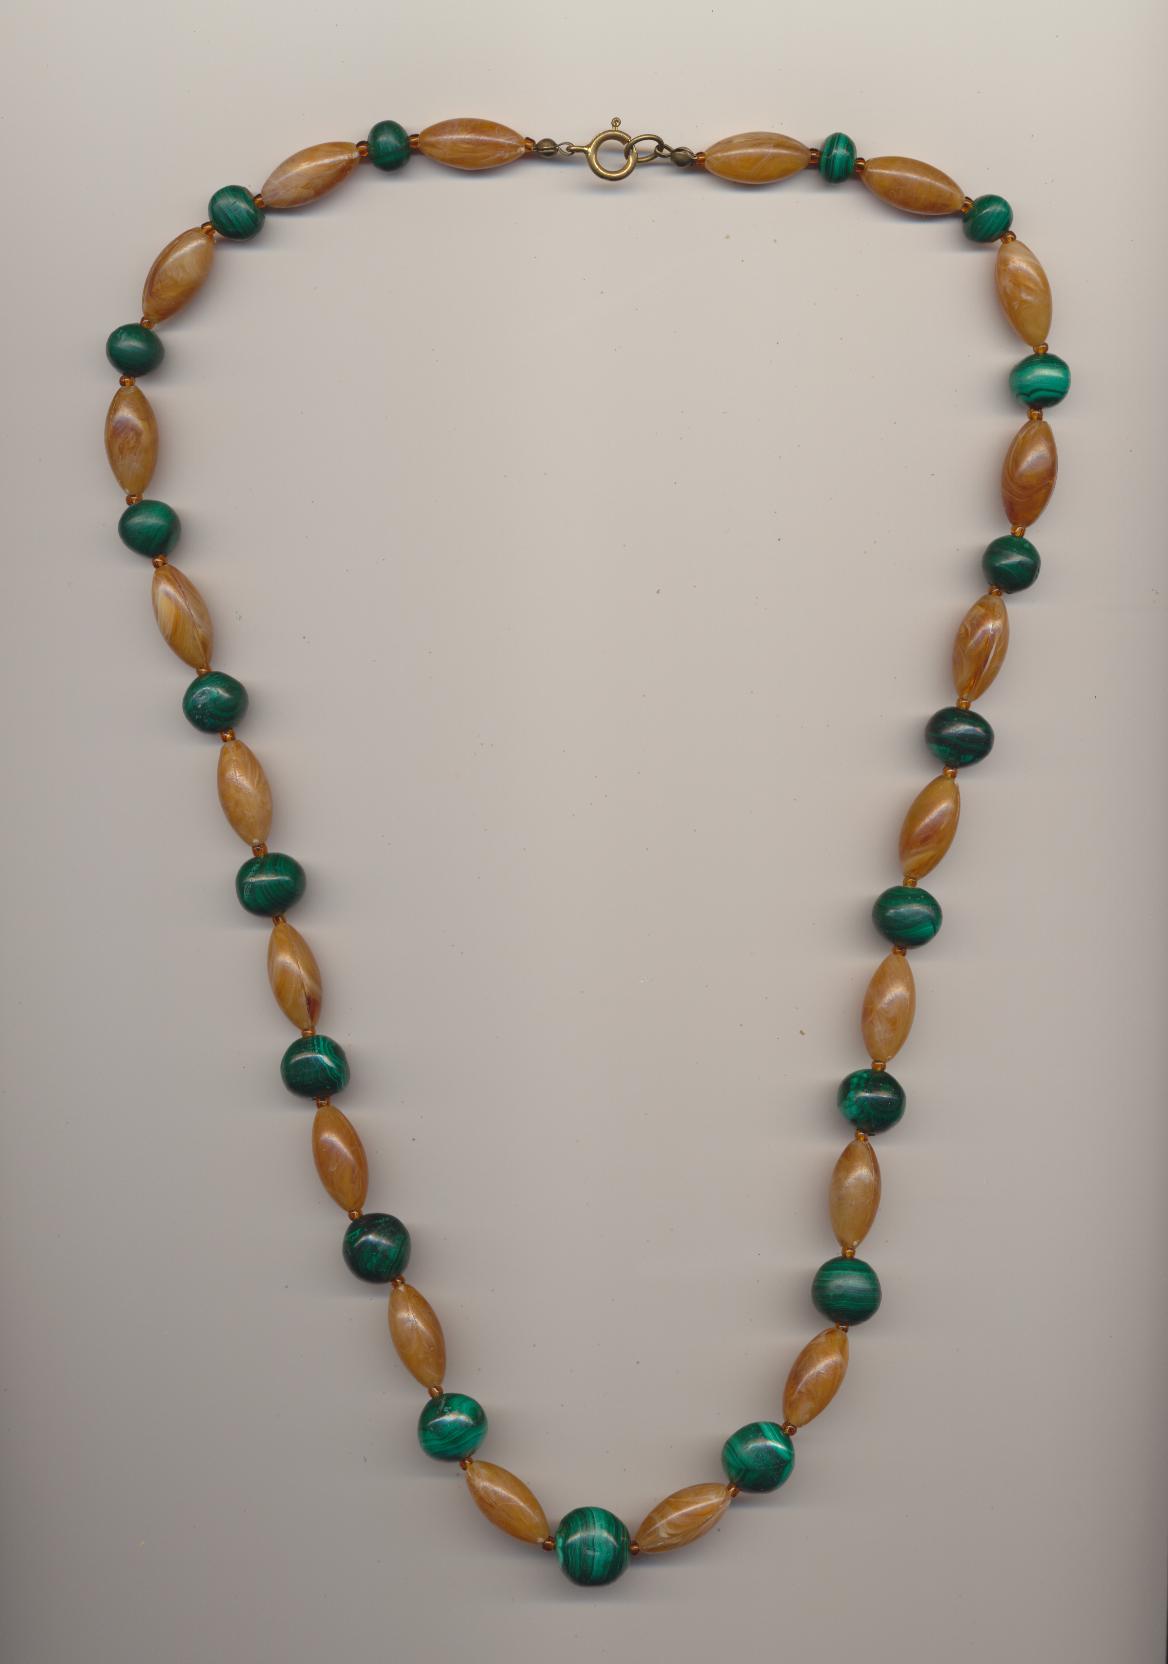 Necklace made of malachite stone and amber imitation plastic beads, length 32.5'' 65cm.